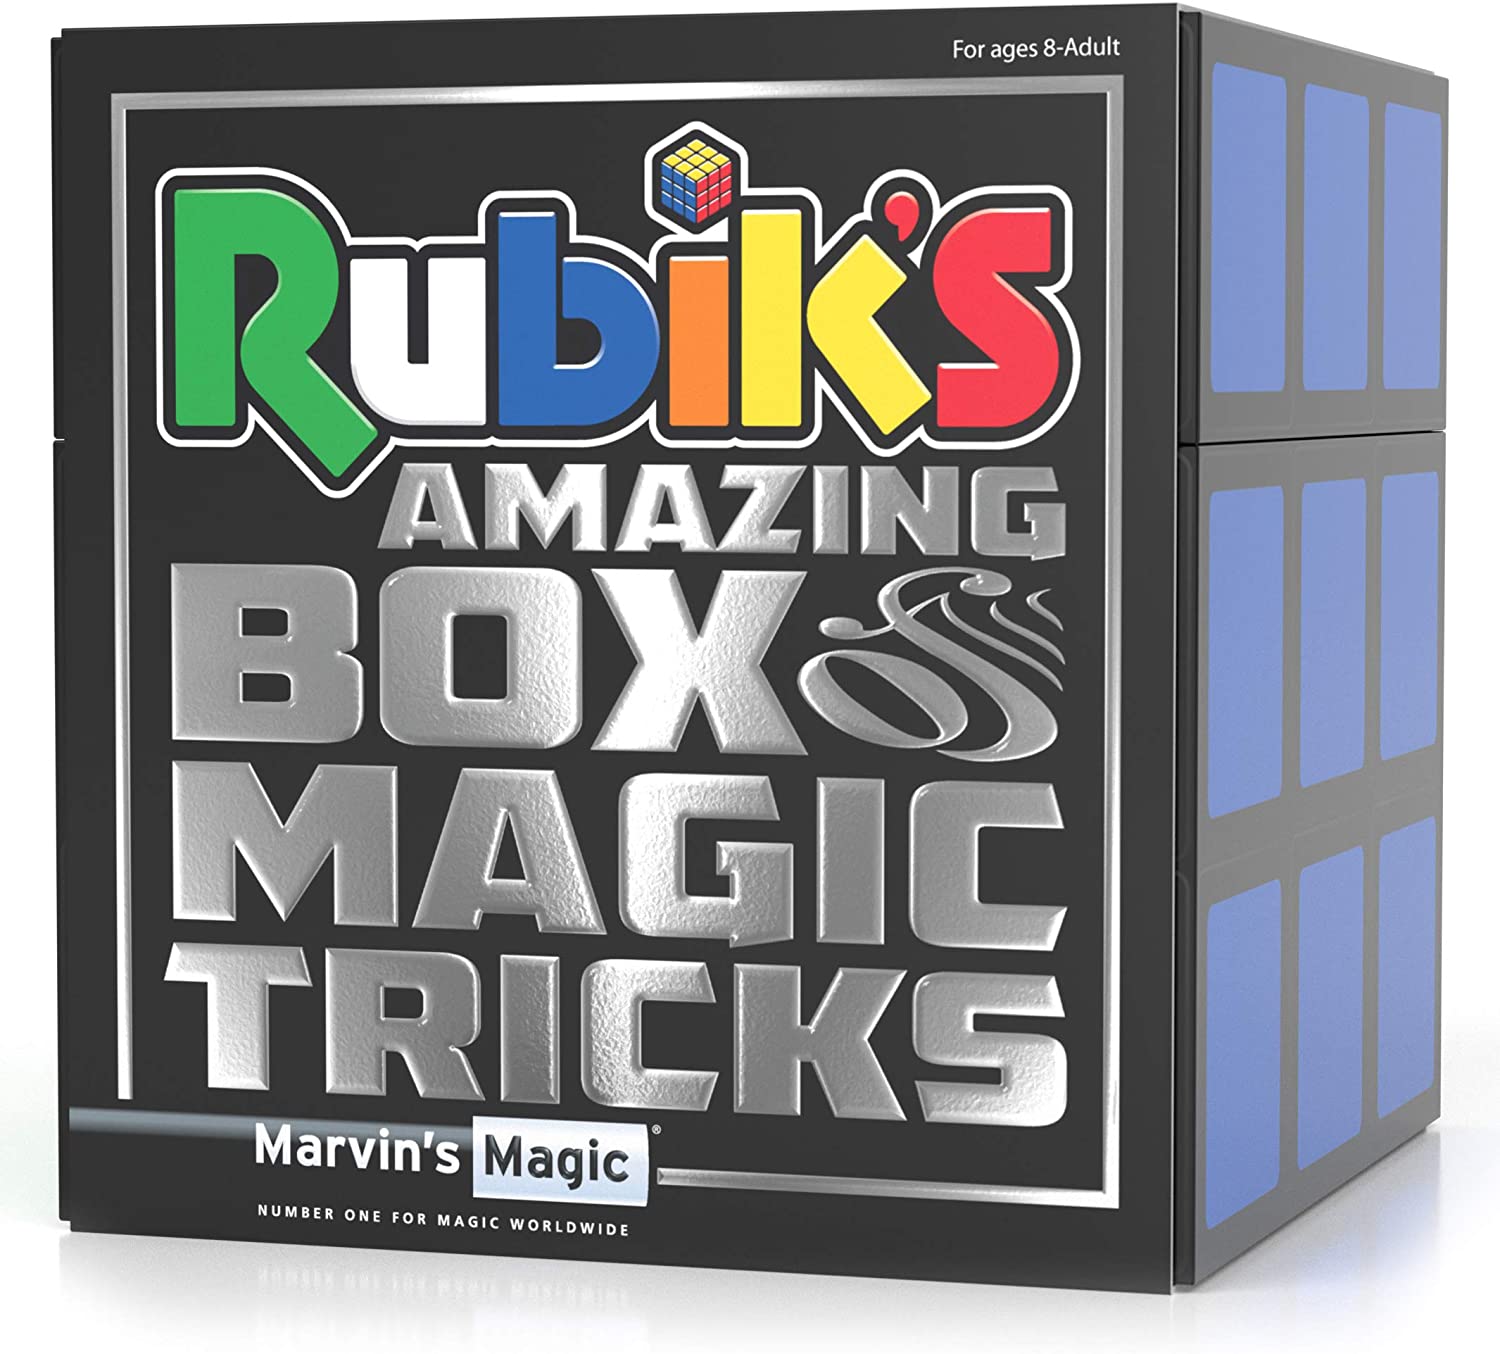 rubik-s-amazing-box-of-magic-tricks